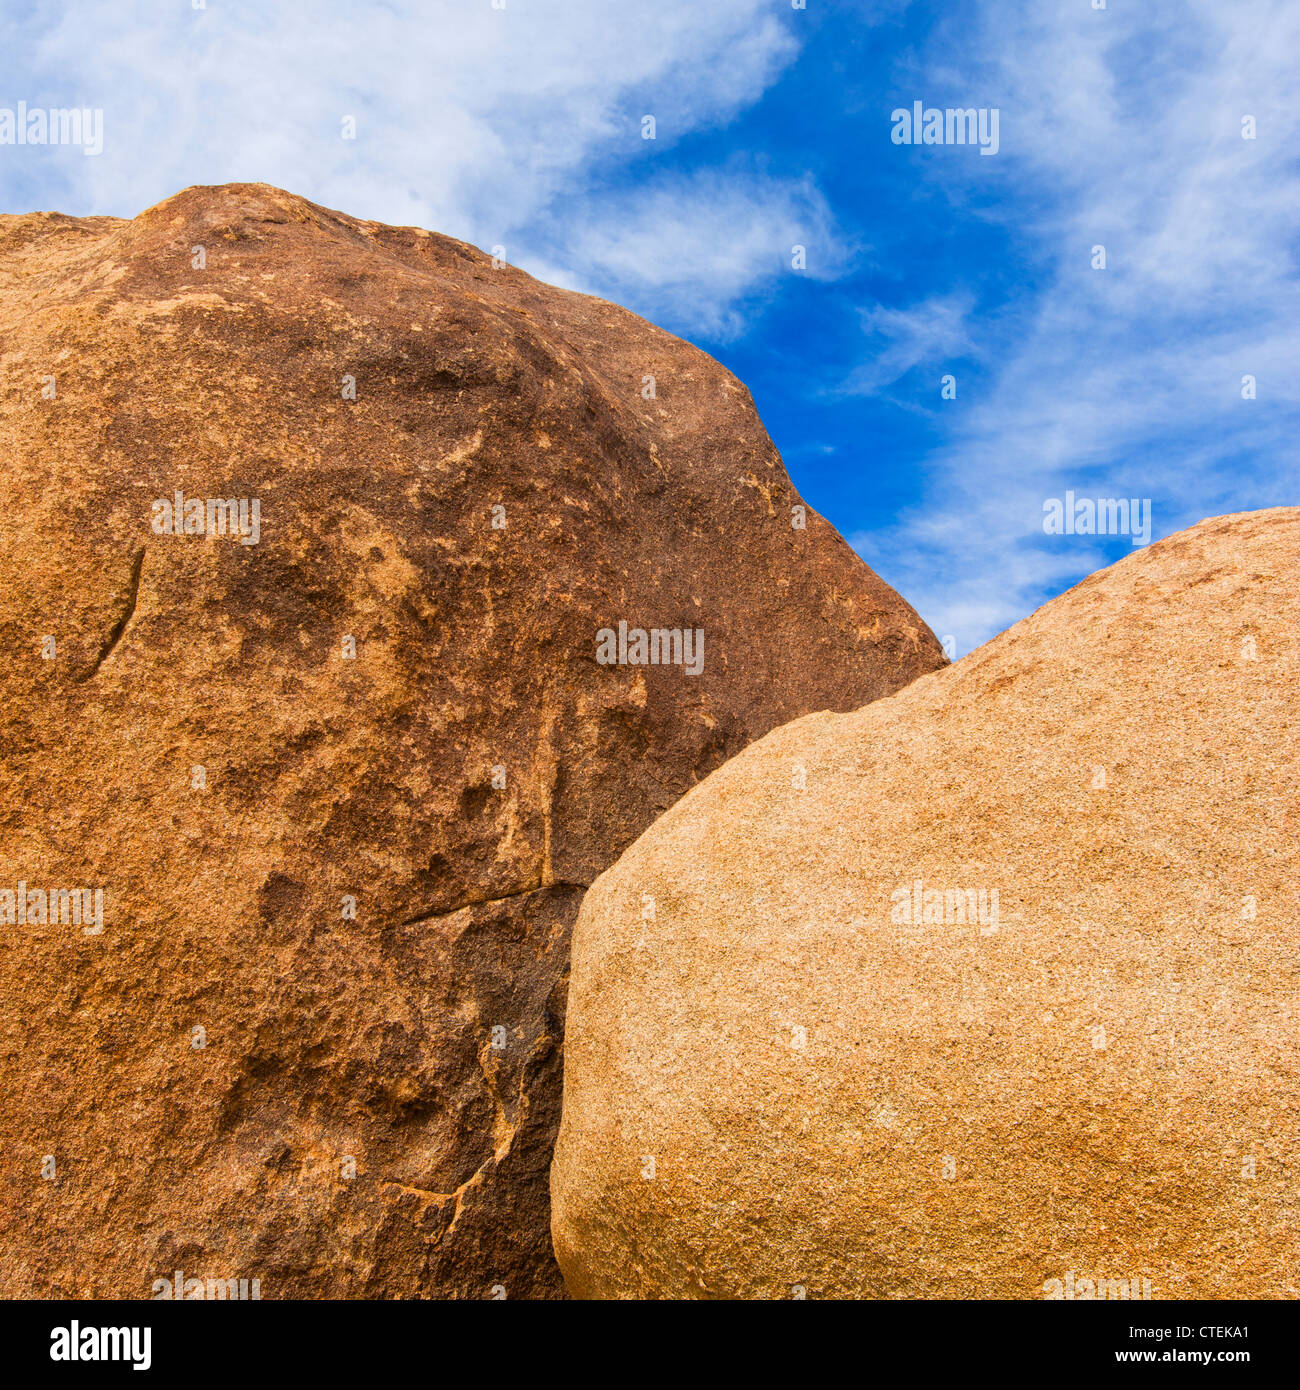 USA, California, Joshua Tree National Park, Detail of boulders Stock Photo